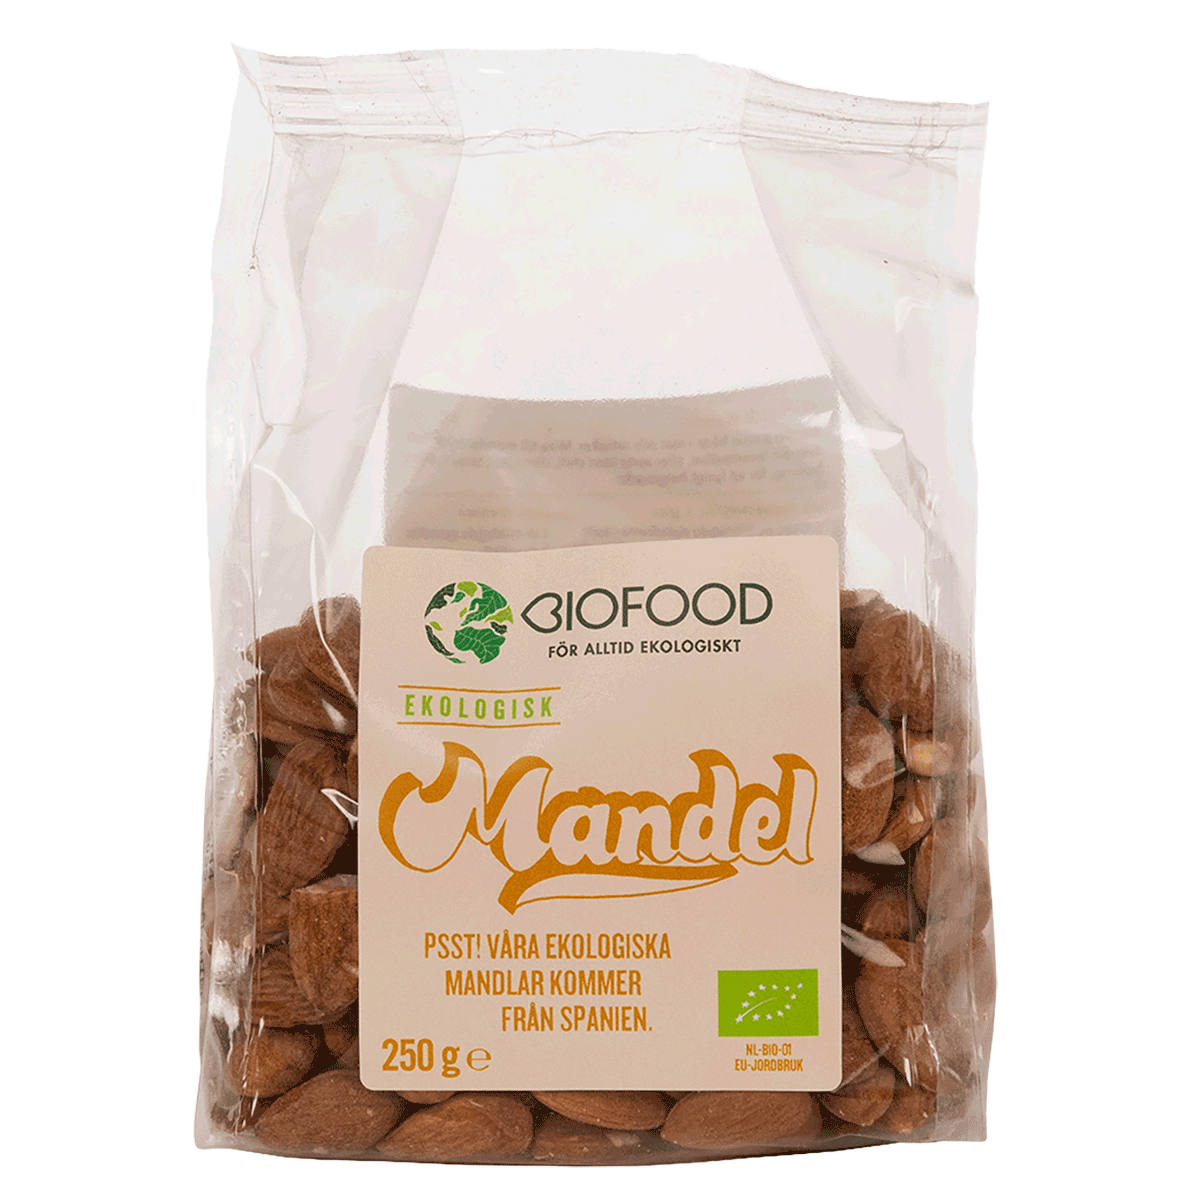 Biofood's Almond '